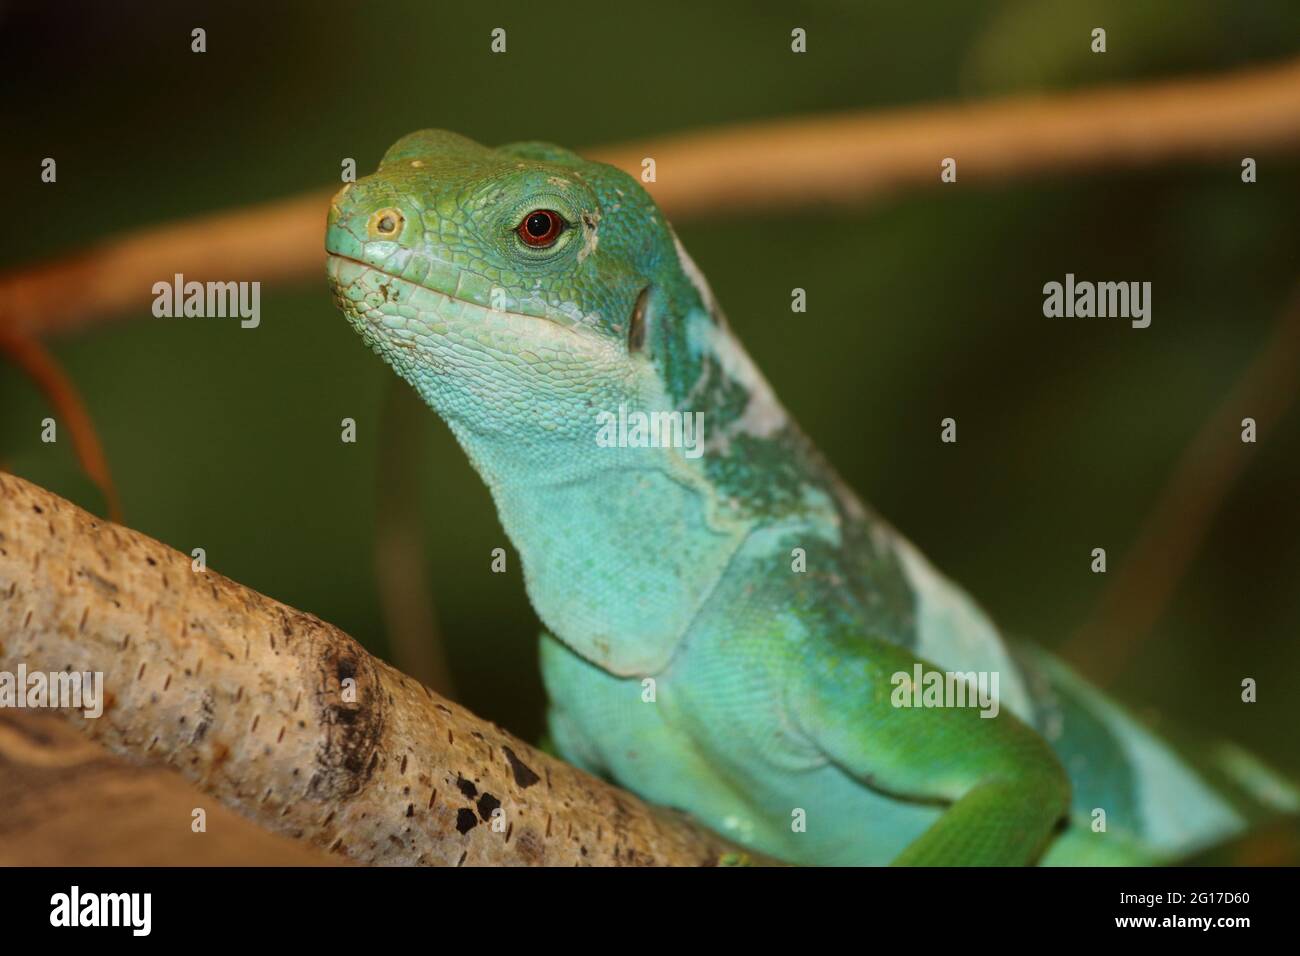 Gebänderter Fidschileguan / Fiji banded iguana or Lau banded iguana / Brachylophus fasciatus Stock Photo